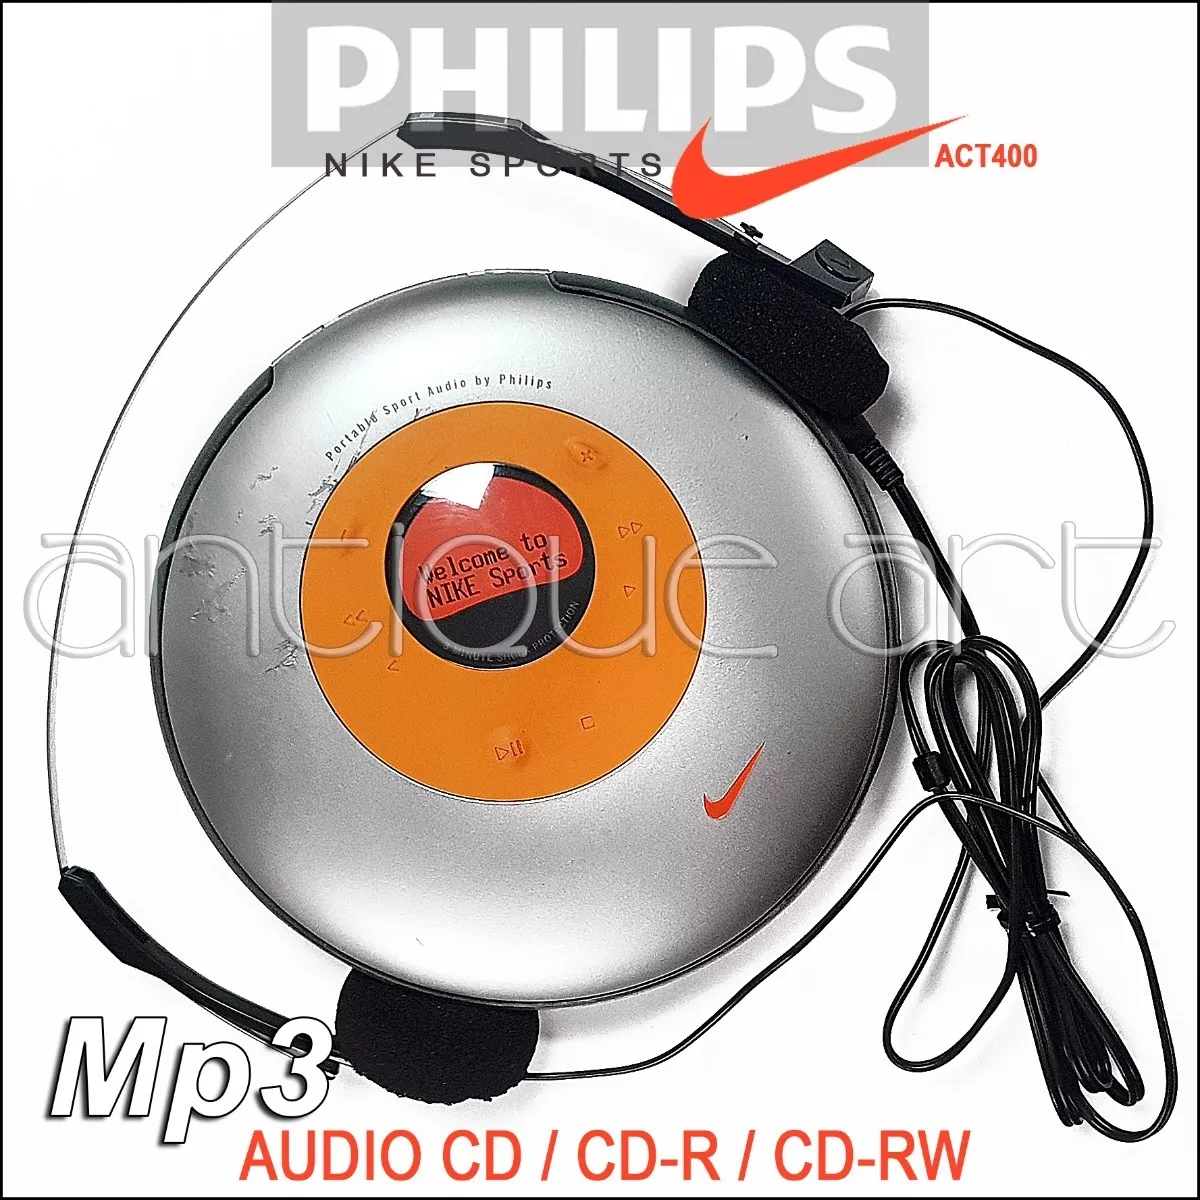 A64 Discman Phillips Nike Sport Act400 Mp3 Cd Audio Walkman 